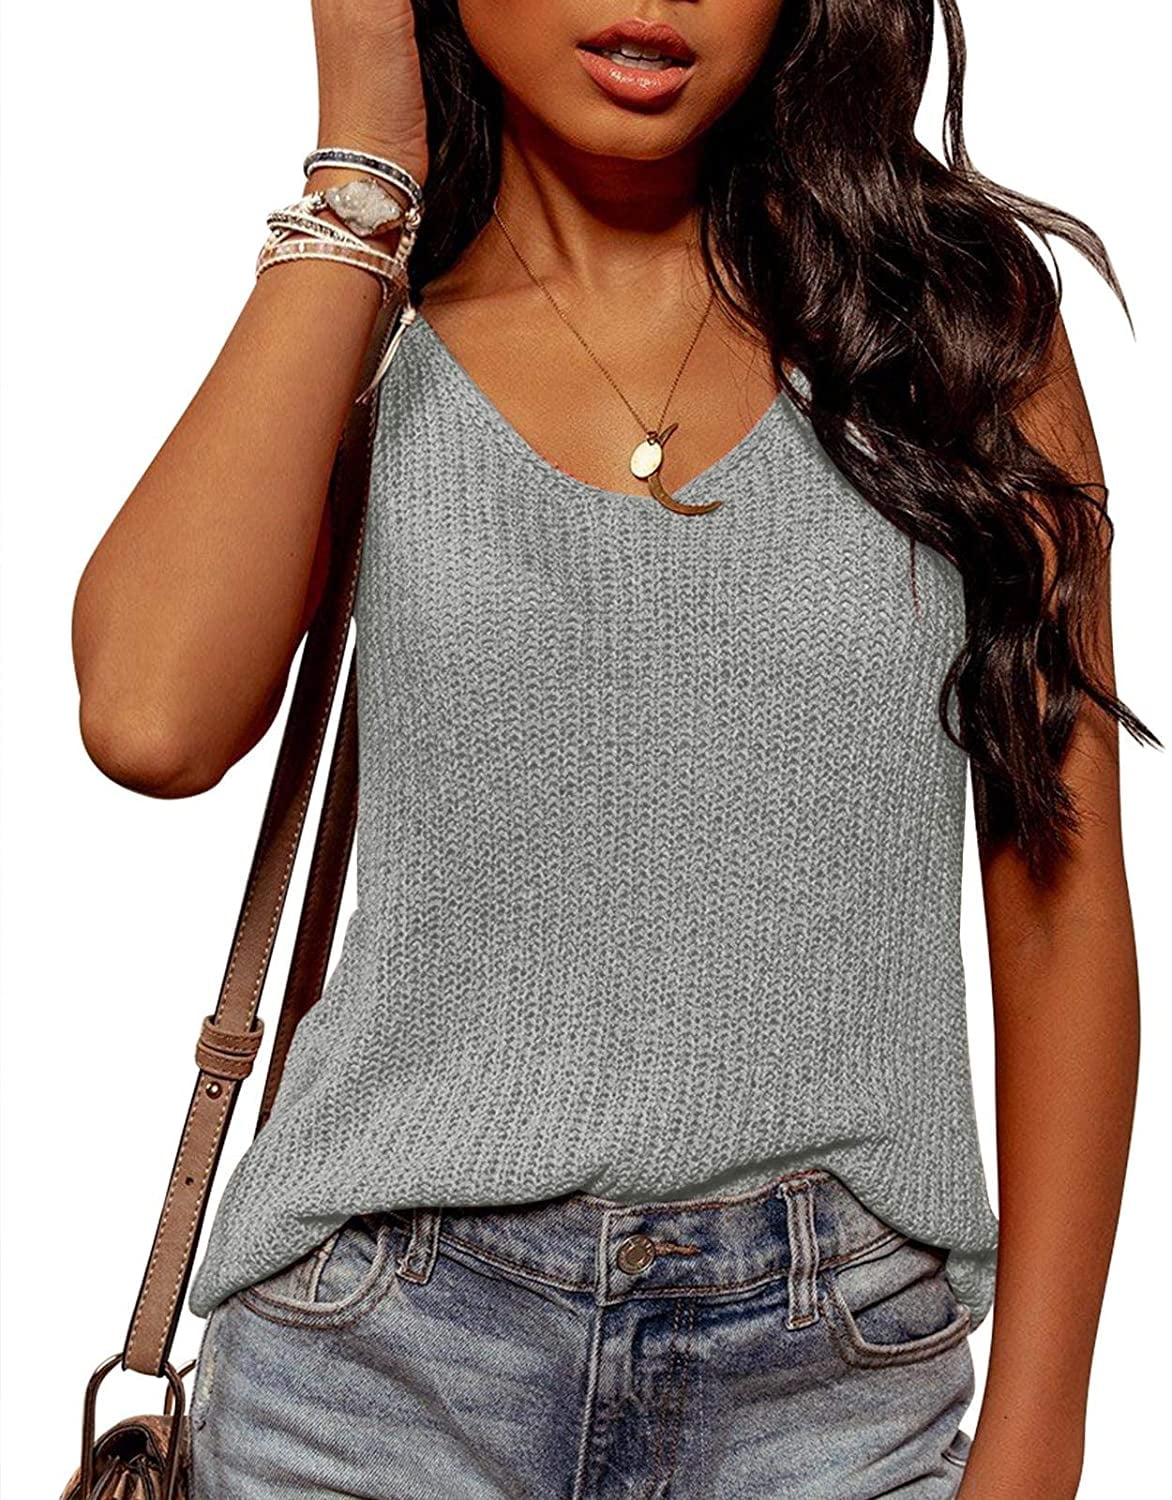 Ybenlow Womens Summer Knit Racerback Tank Tops V Neck Sleeveless Sweater Casual Sheer Vest Shirt Blouses 